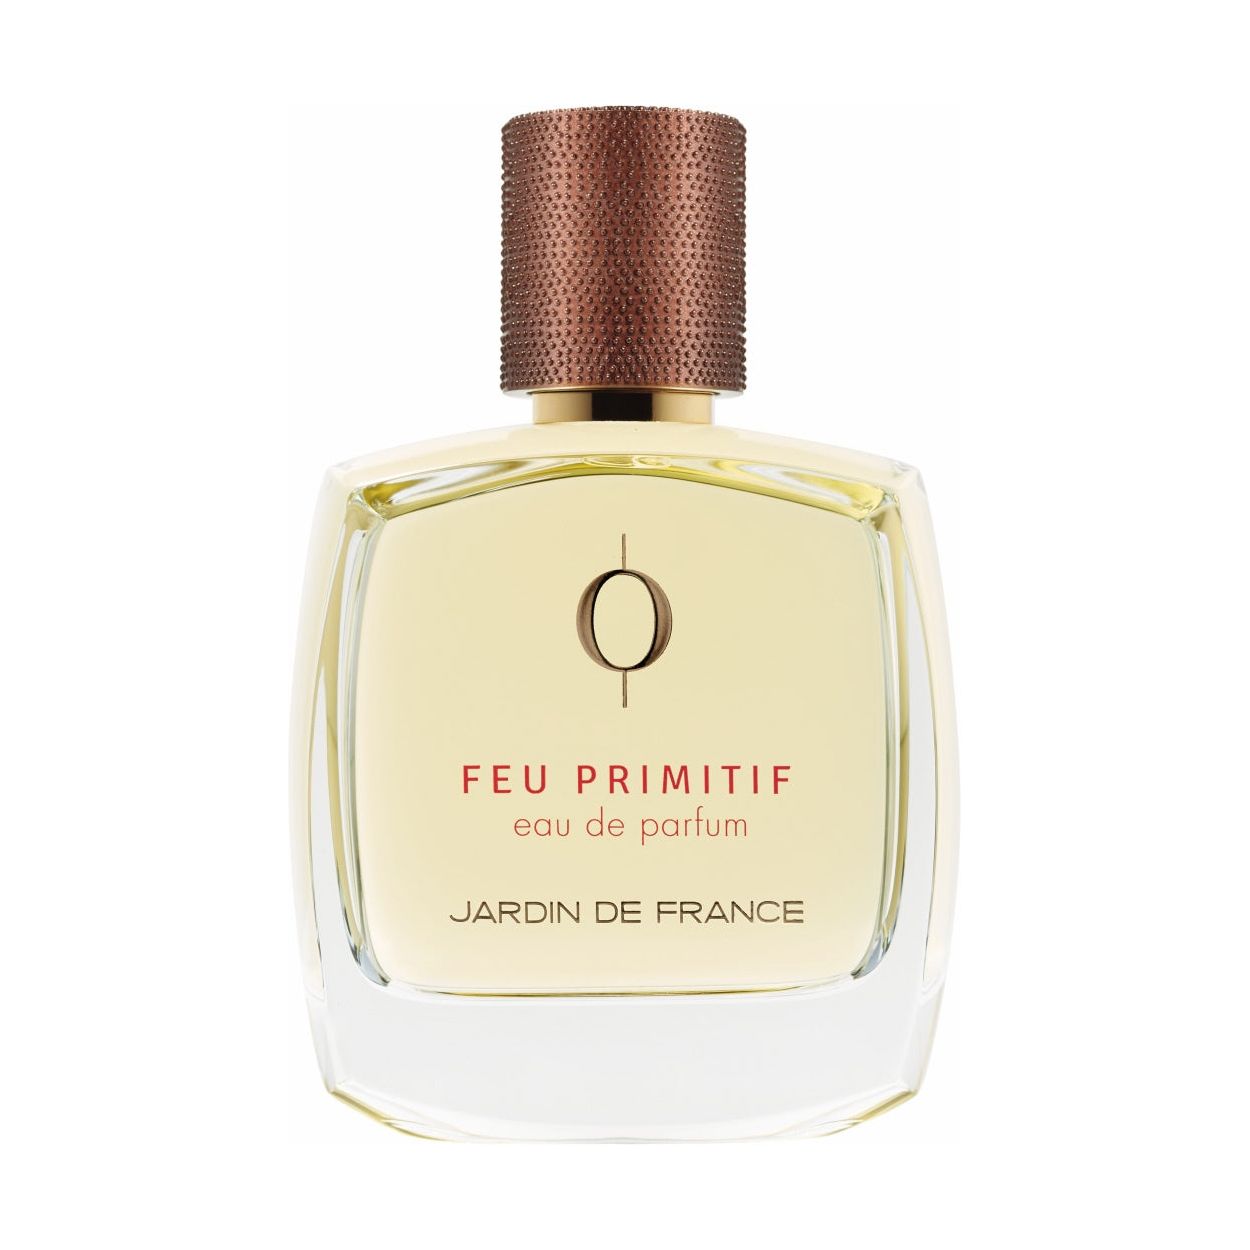 Jardine de France - Feu Primitif - Eau de Parfum